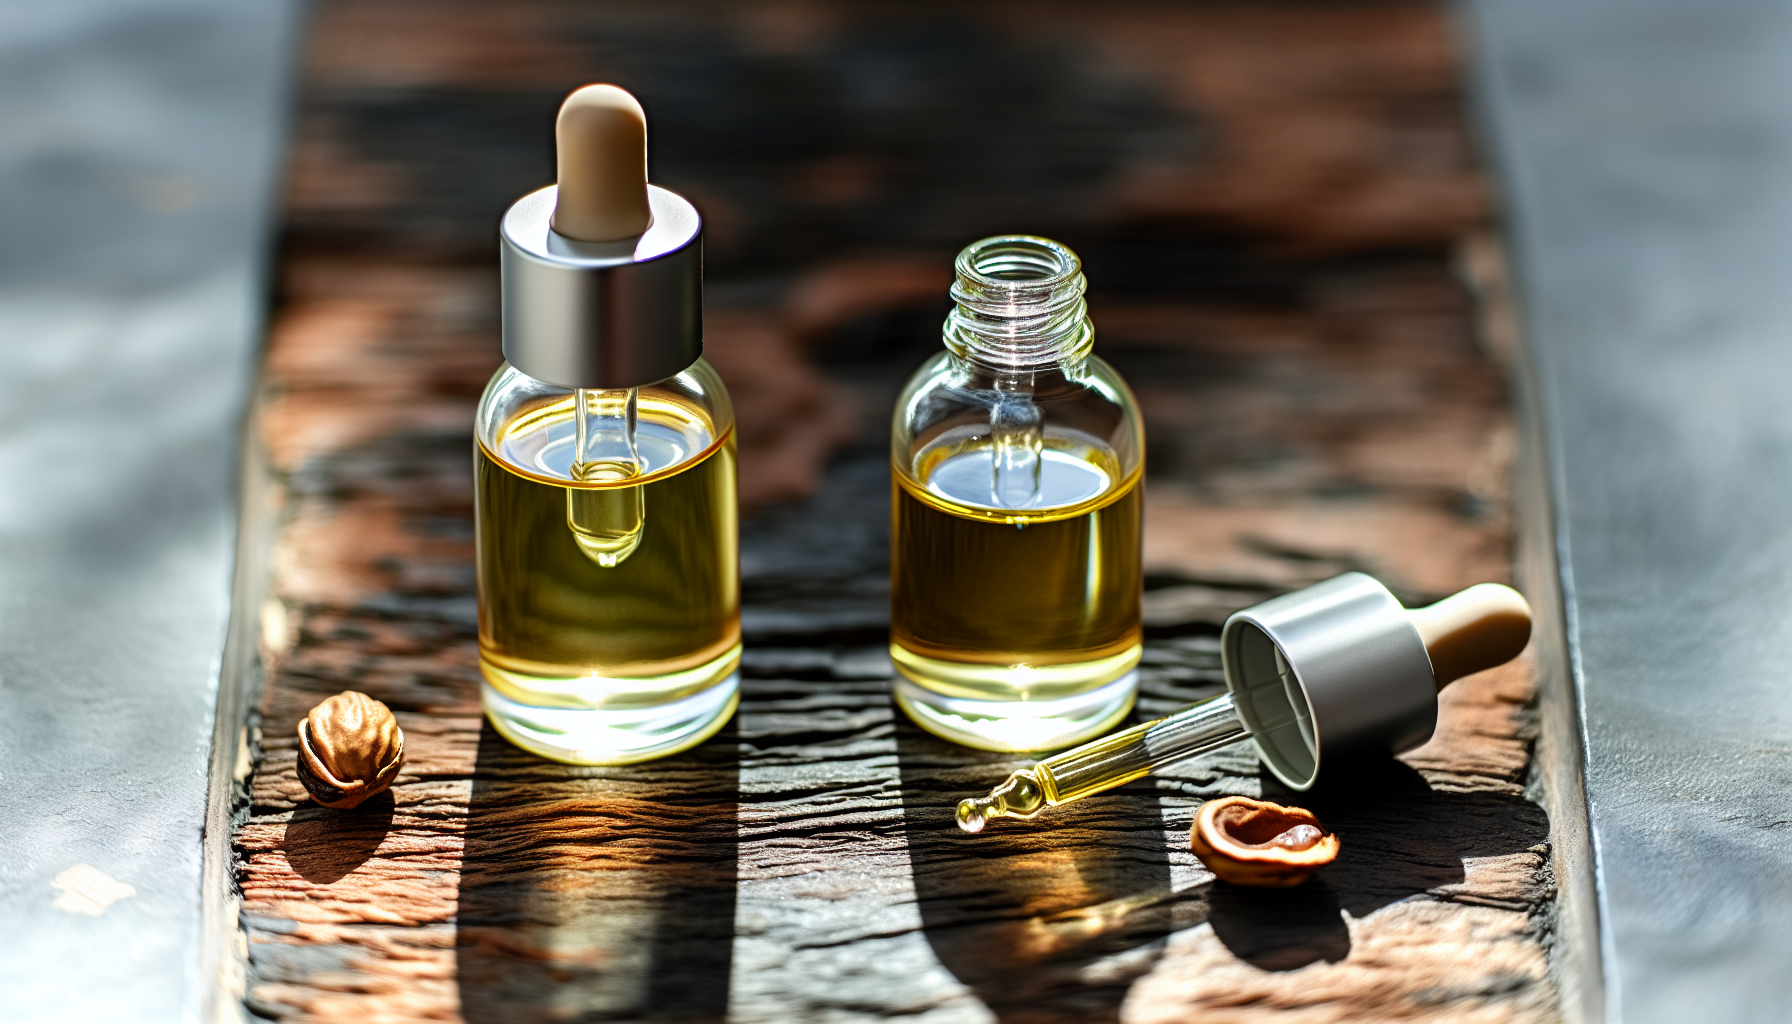 Close-up of natural ingredients like jojoba oil and argan oil